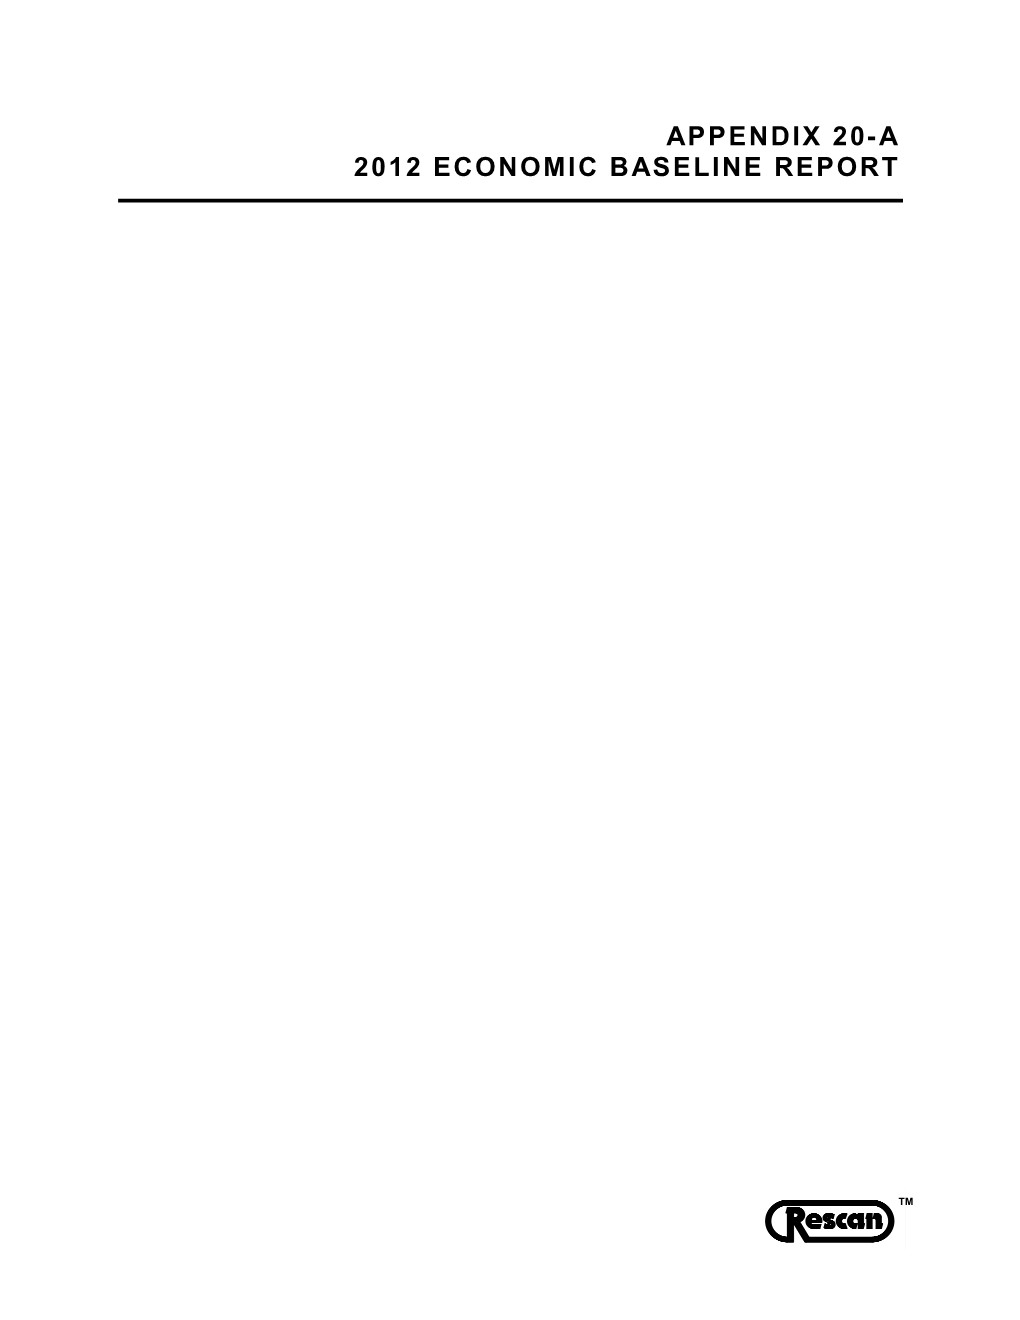 20-A 2012 Economic Baseline Report